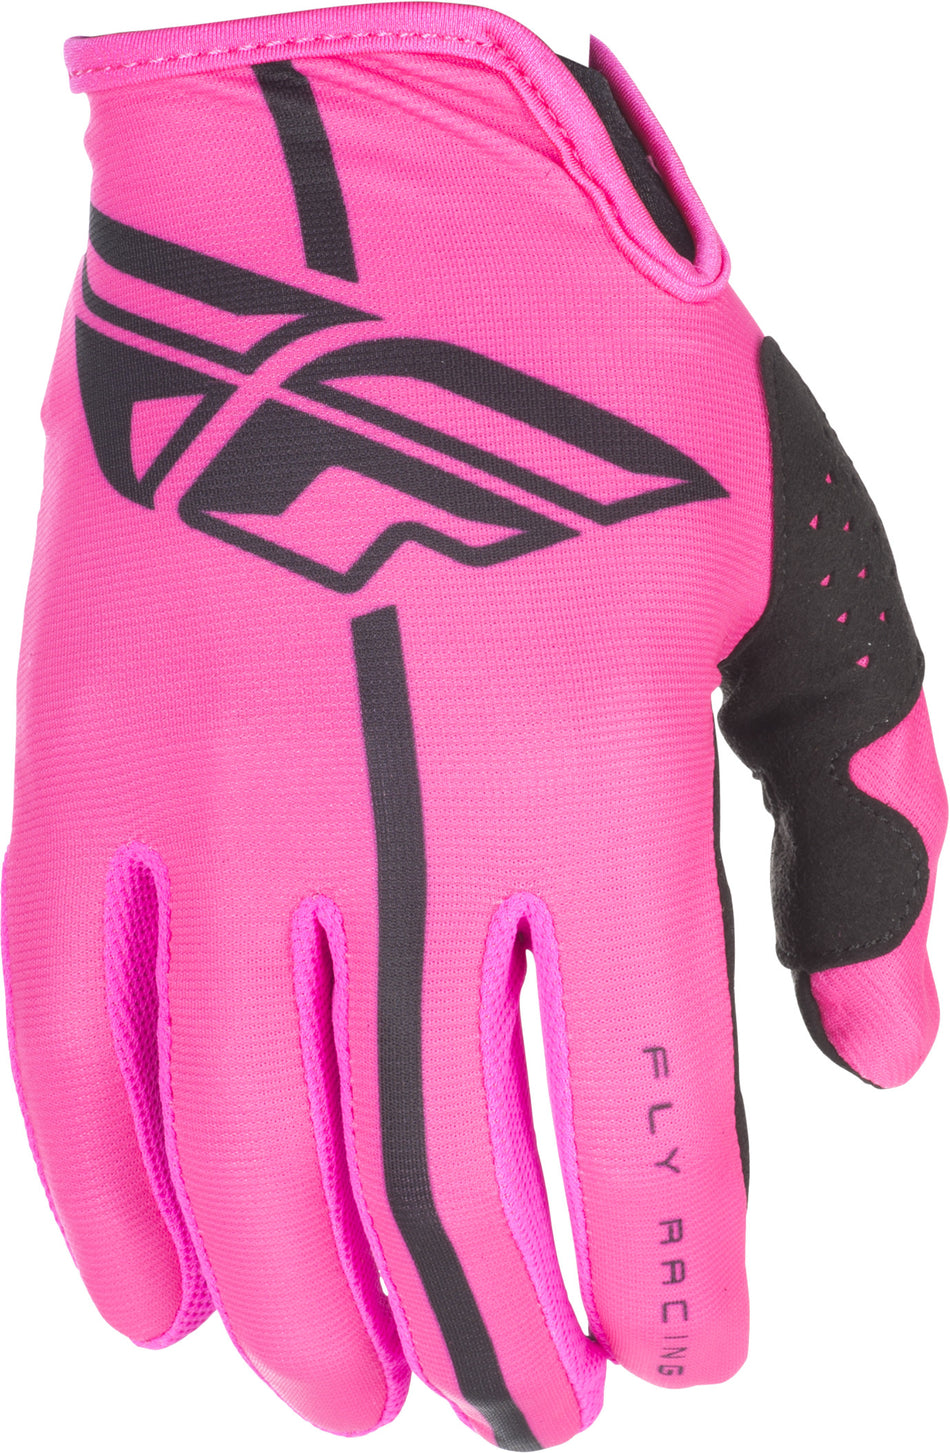 FLY RACING Lite Gloves Neon Pink/Black Sz 8 371-01708